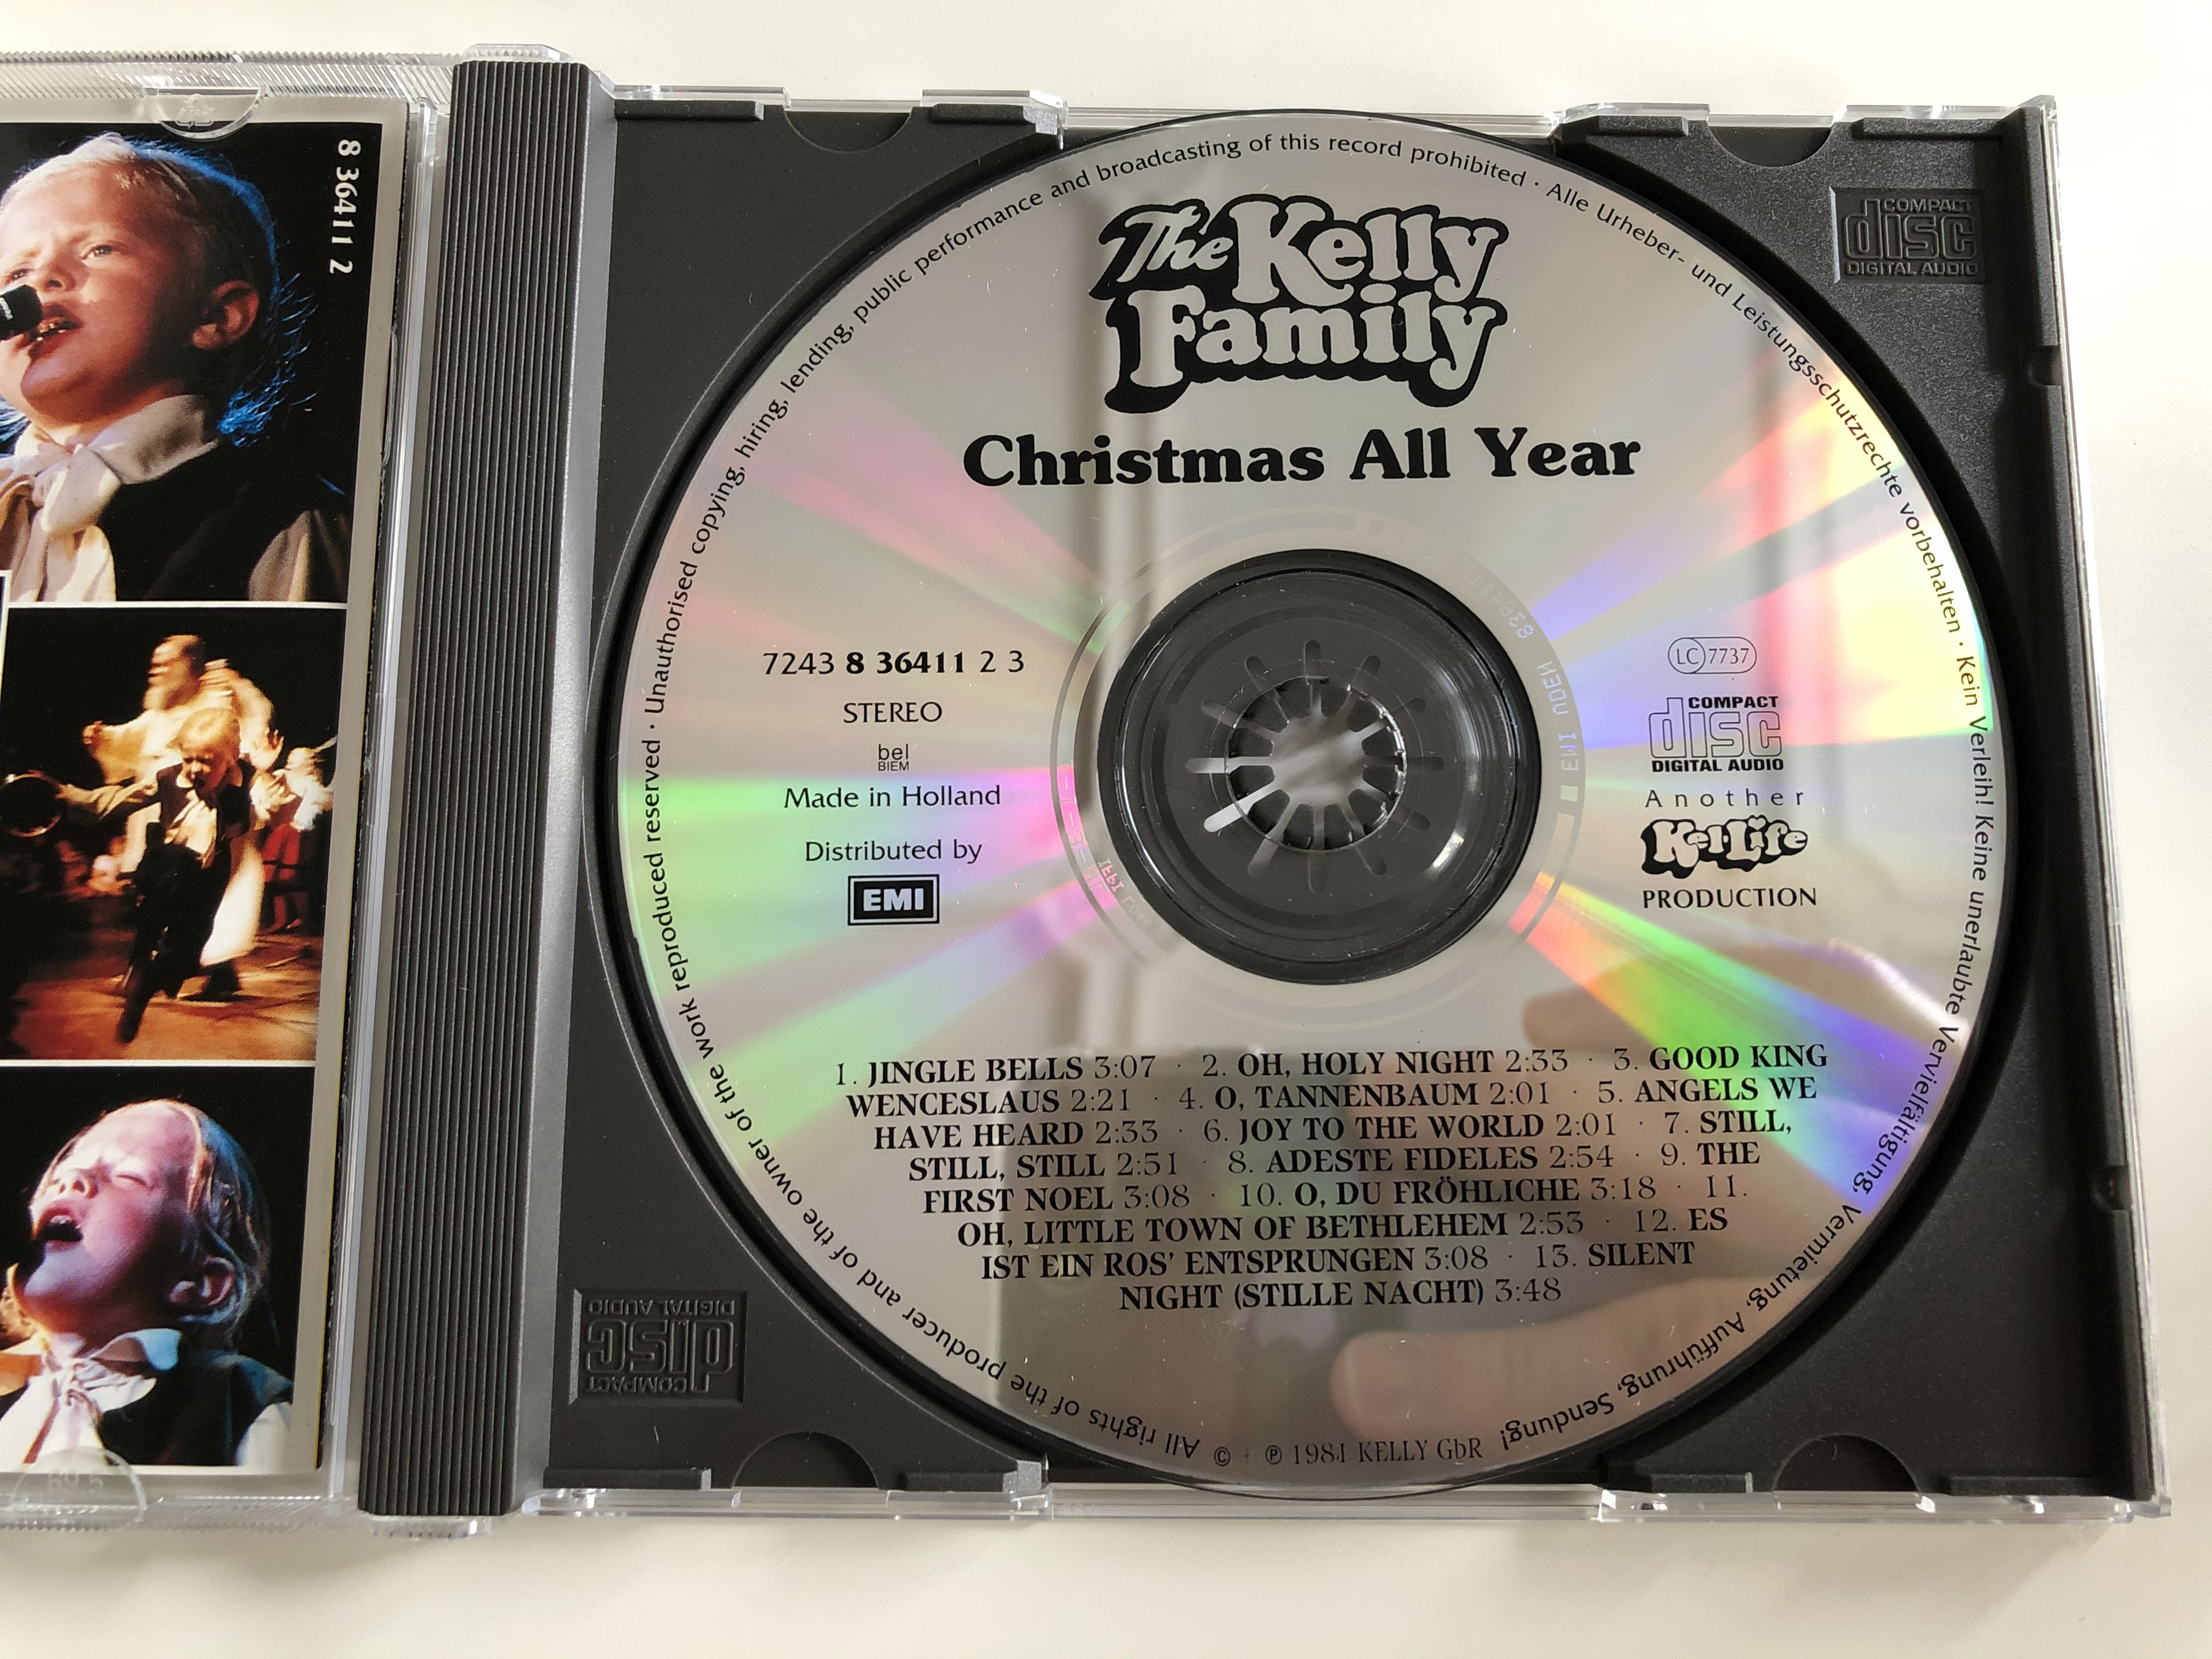 the-kelly-family-christmas-all-year-kel-life-audio-cd-stereo-724383641123-6-.jpg